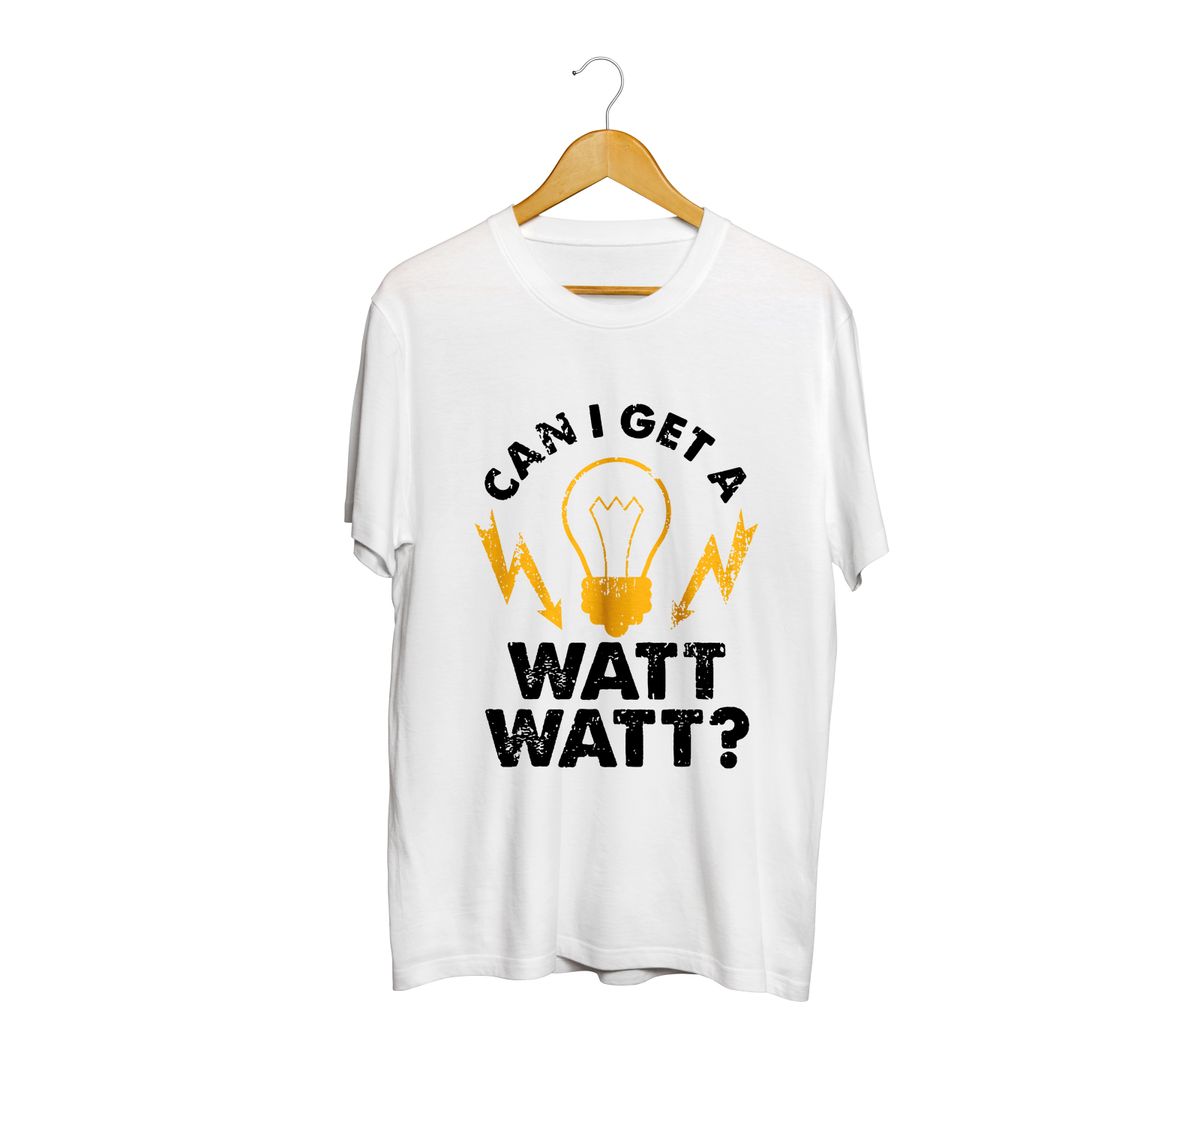 Proud Electricians Society White Watt T-Shirt image 1